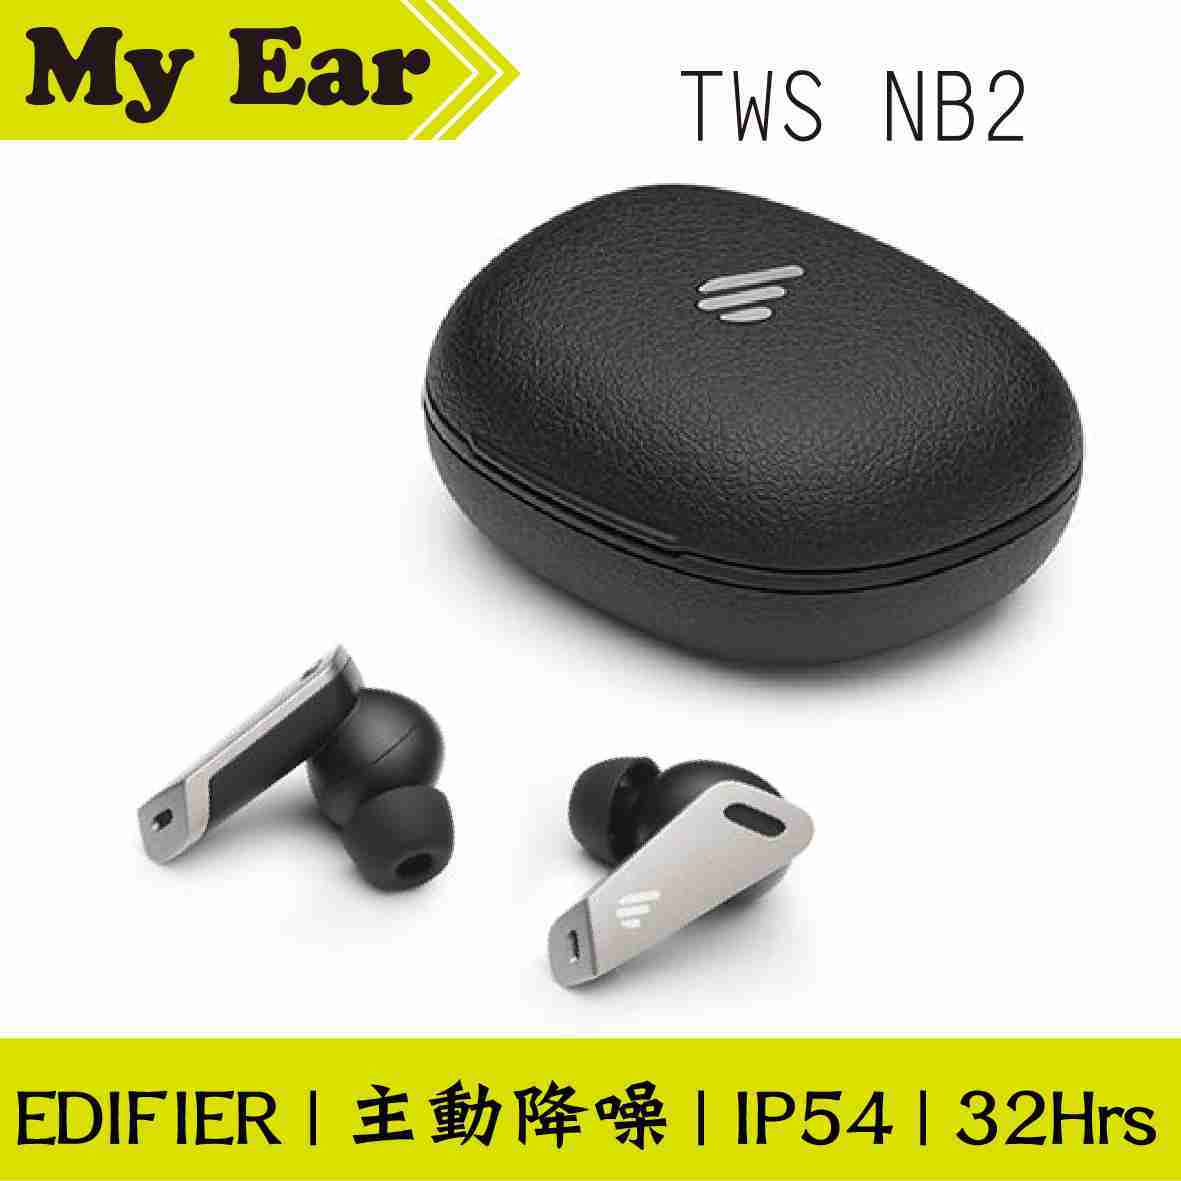 EDIFIER 漫步者 TWS NB2 主動降噪 環境音 IP54 真無線 藍芽 耳機 | My Ear 耳機專門店